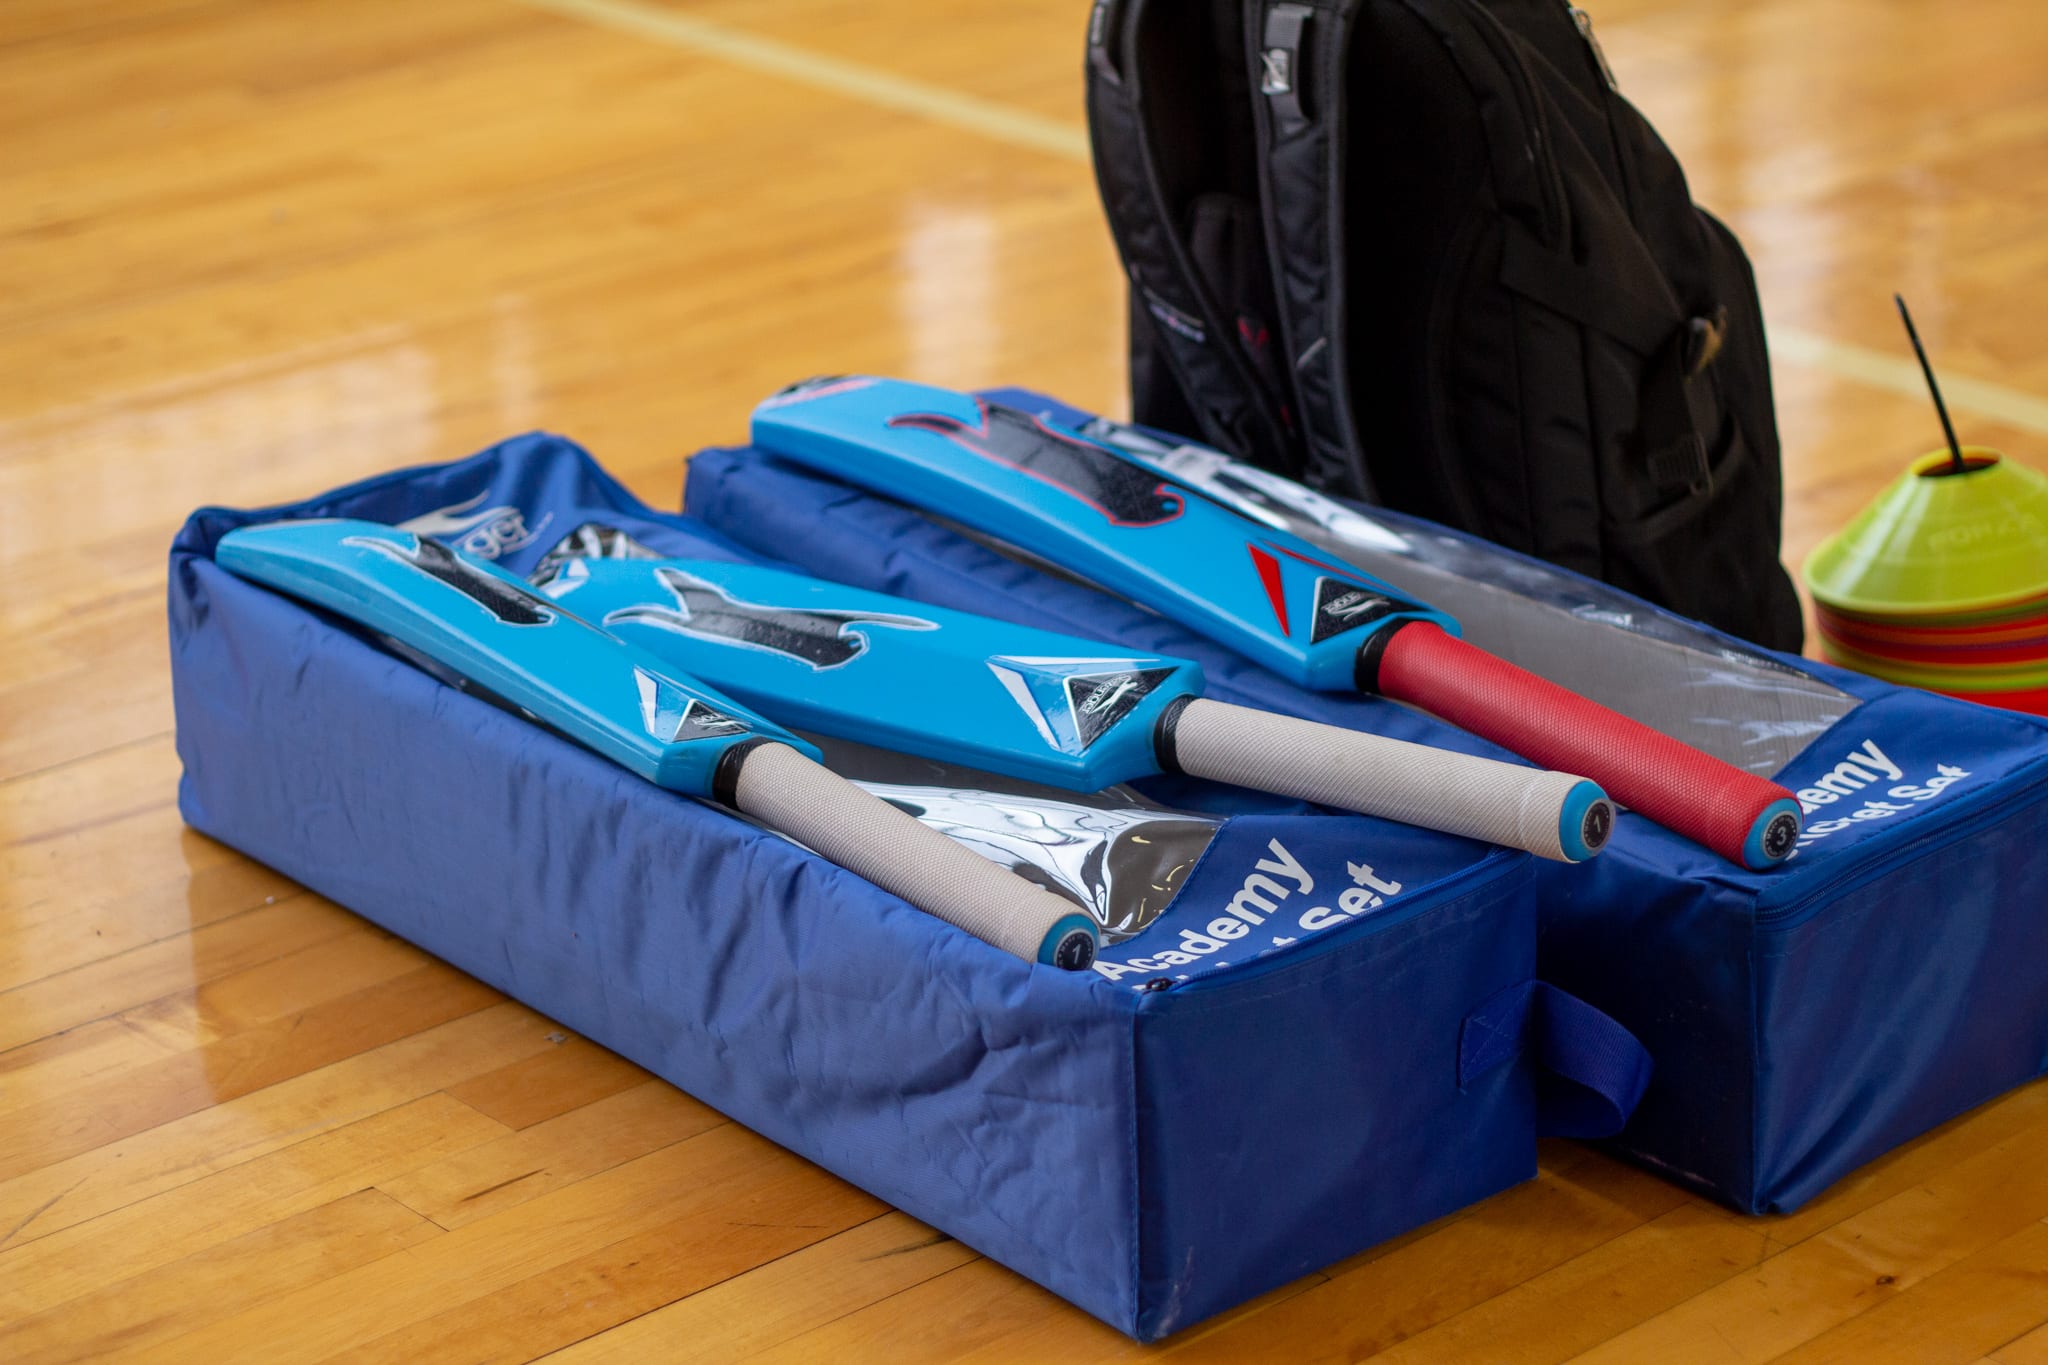 blue cricket bats on bags